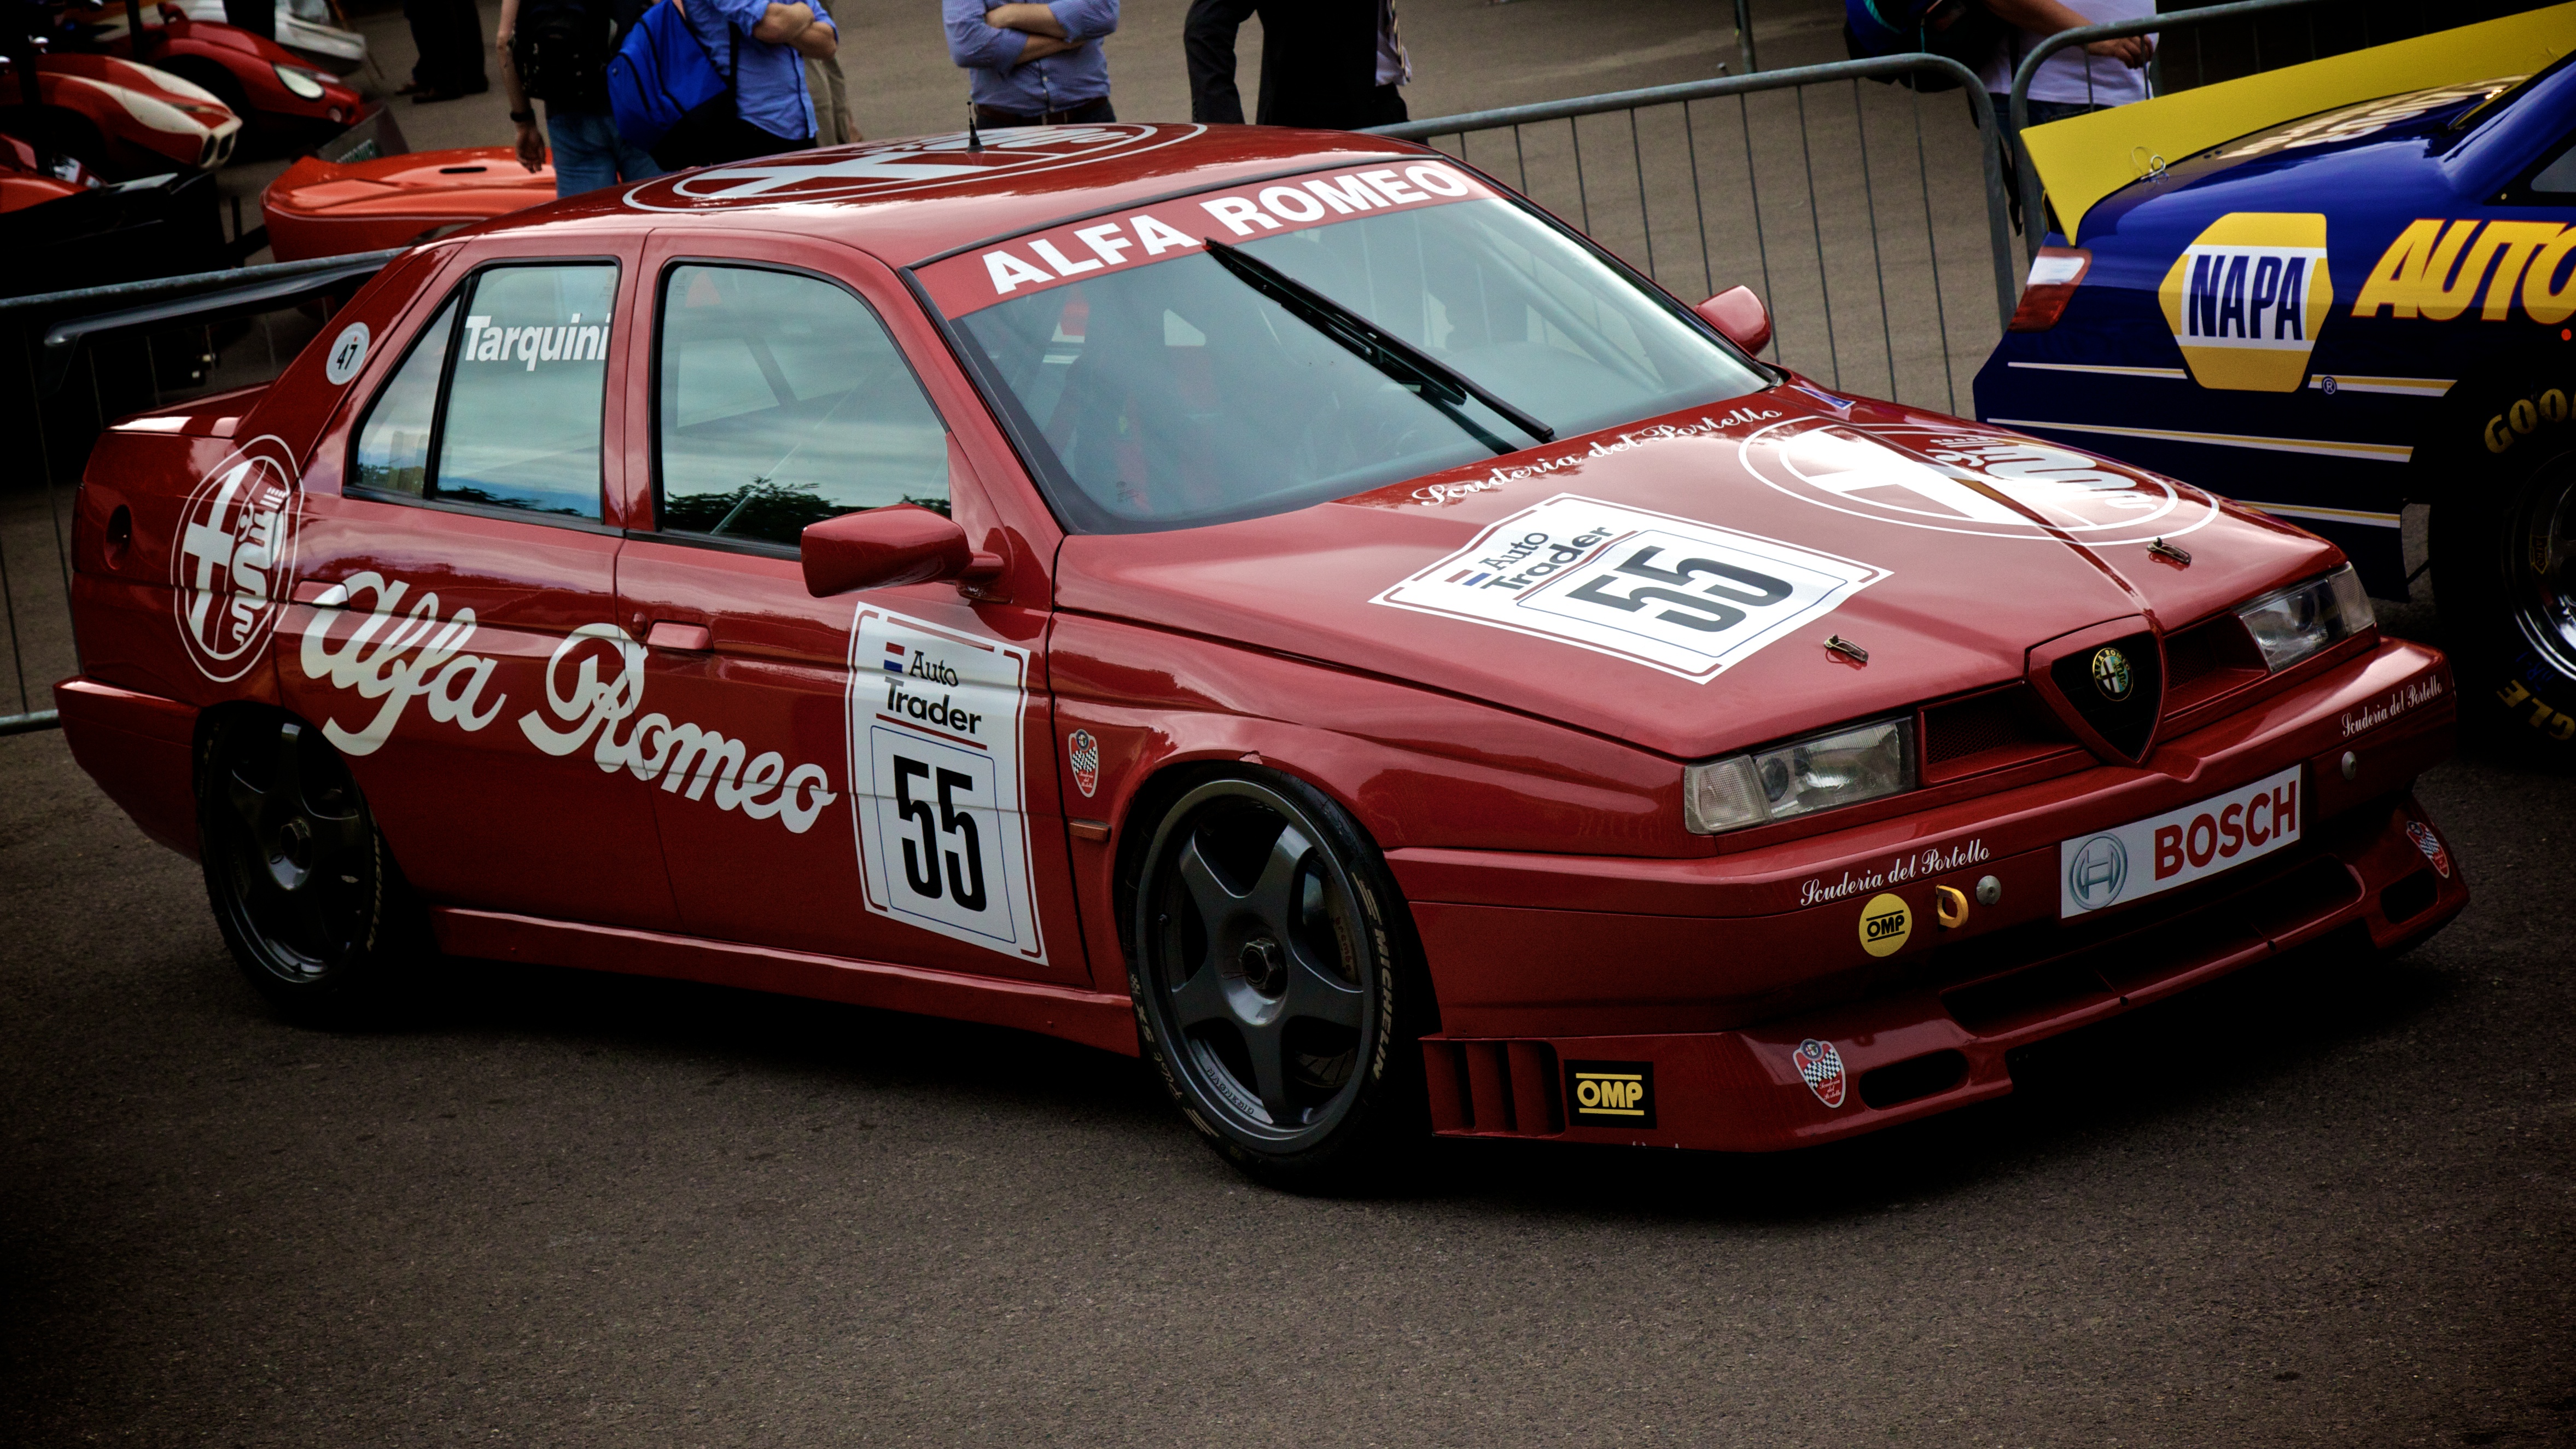 Alfa Romeo 155 BTCC car | Flickr - Photo Sharing!